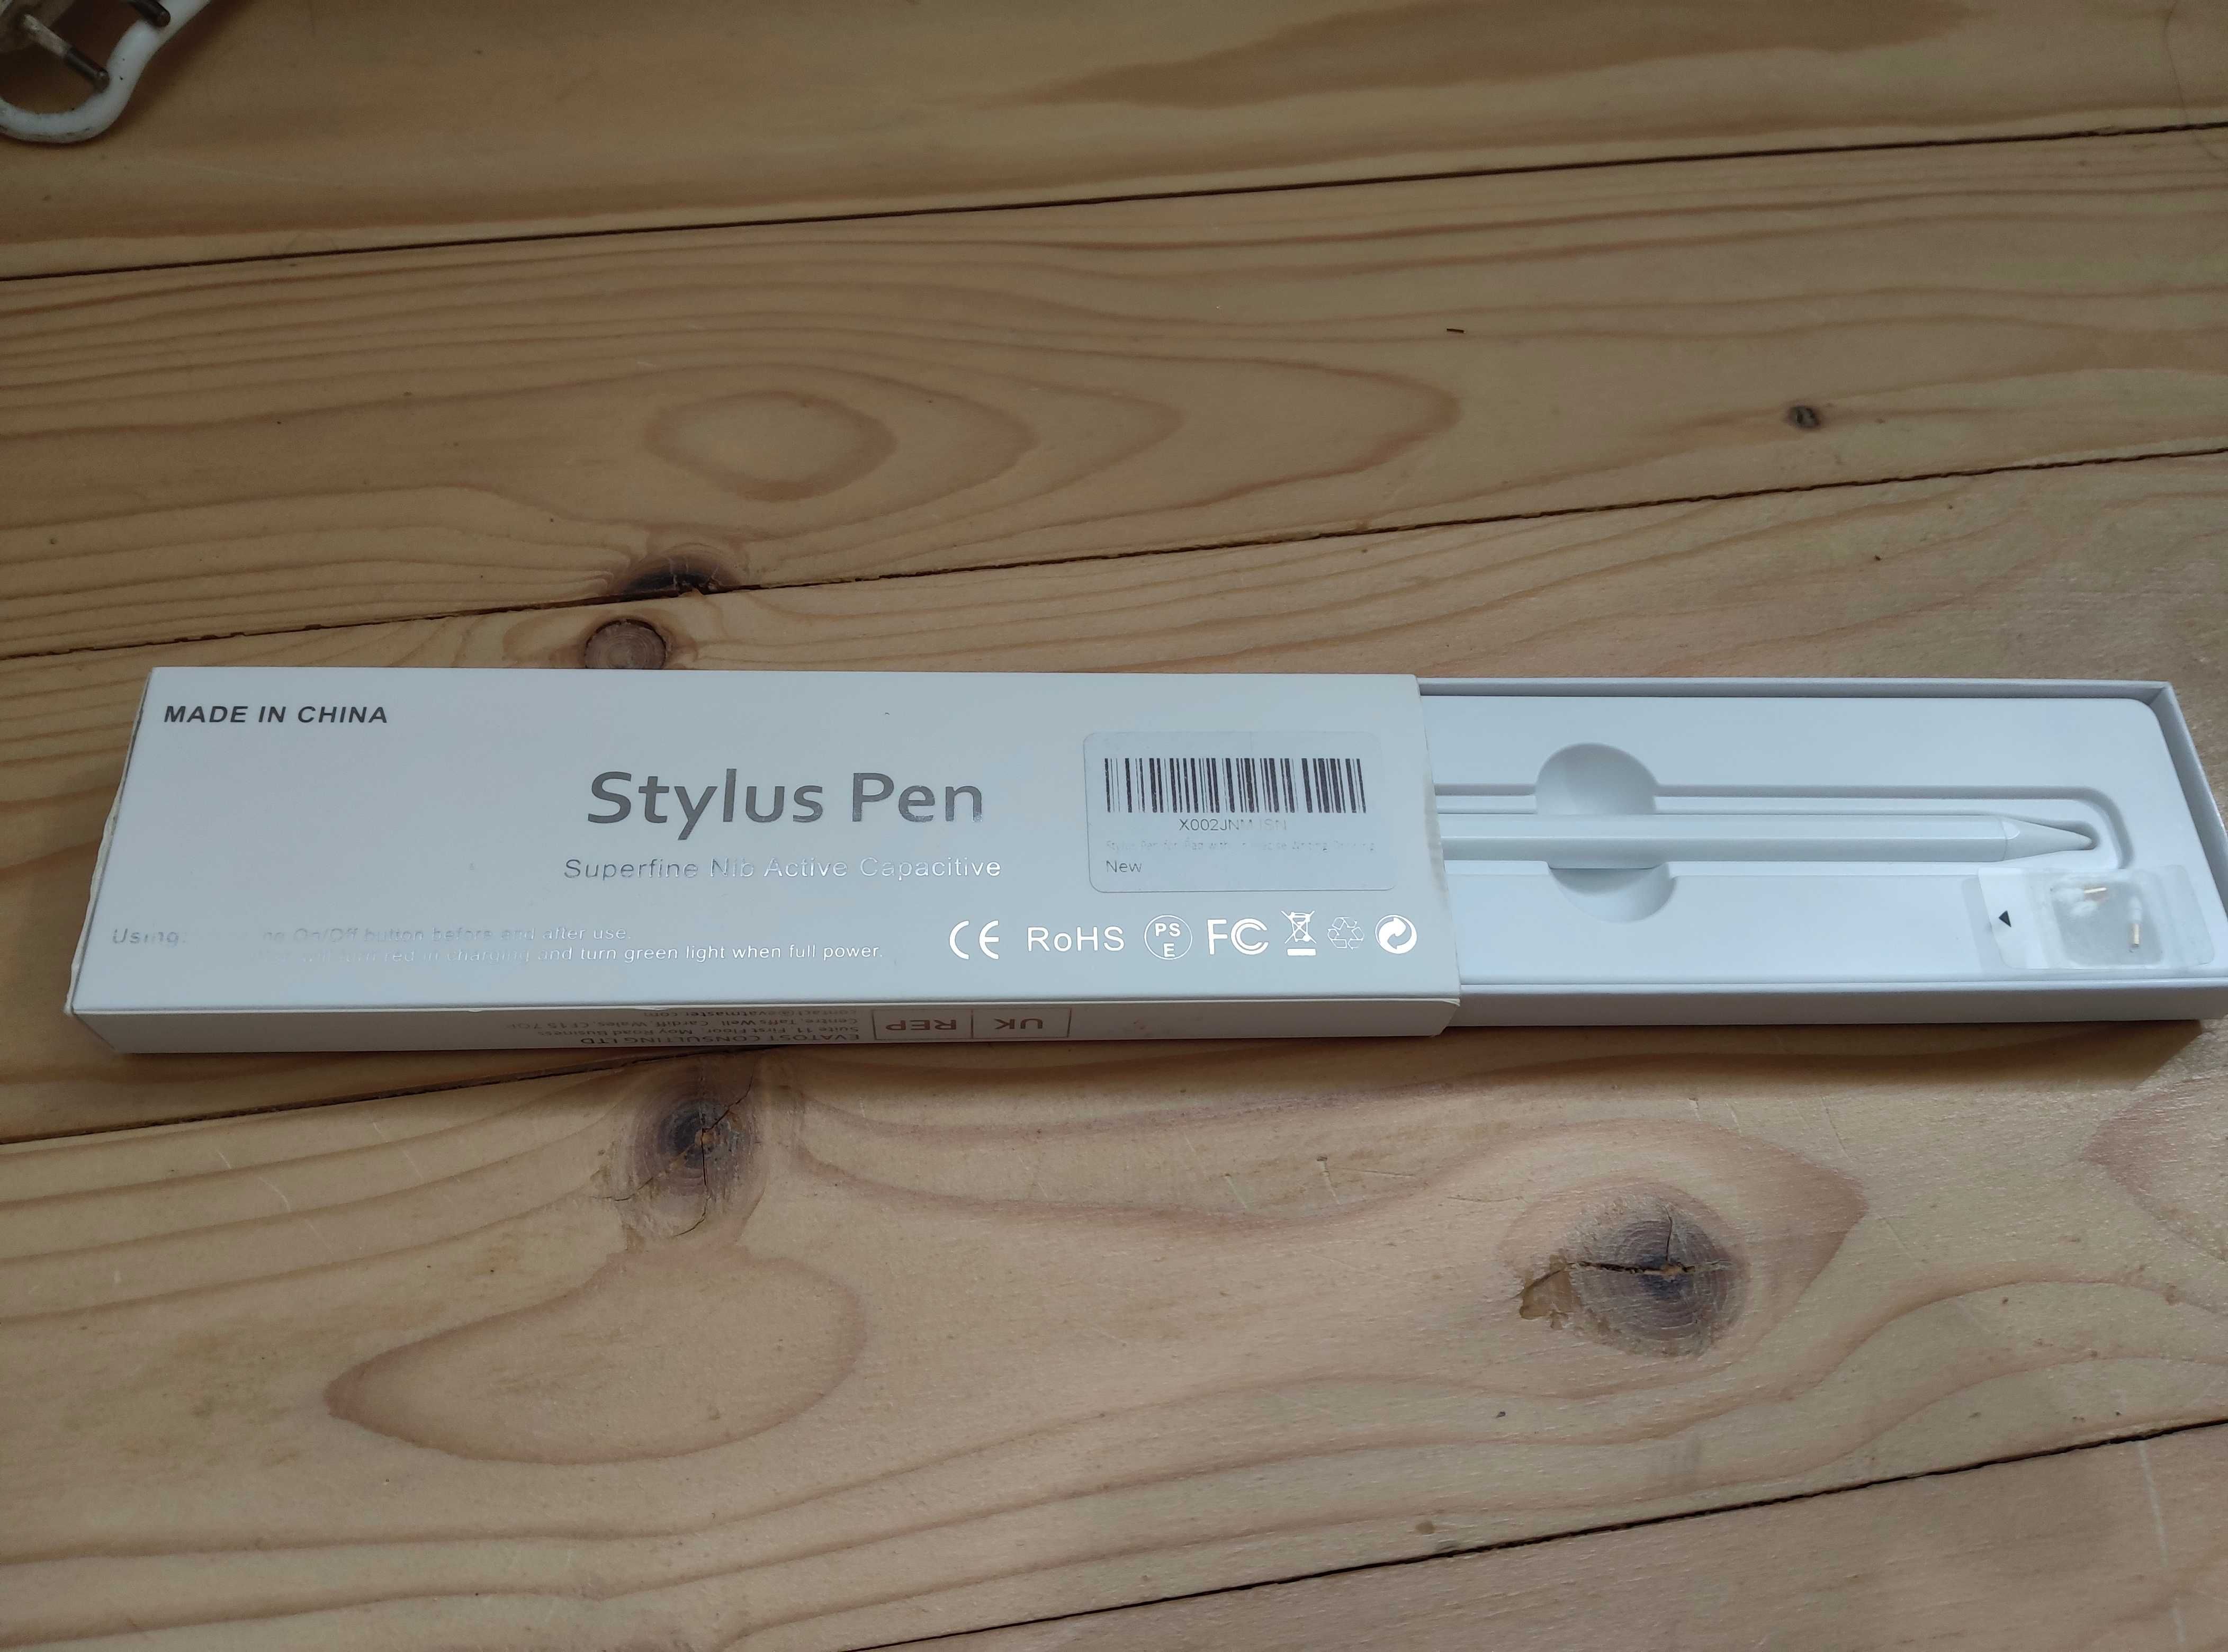 Stylus Pen (Superfine Nib Active Capacitive)